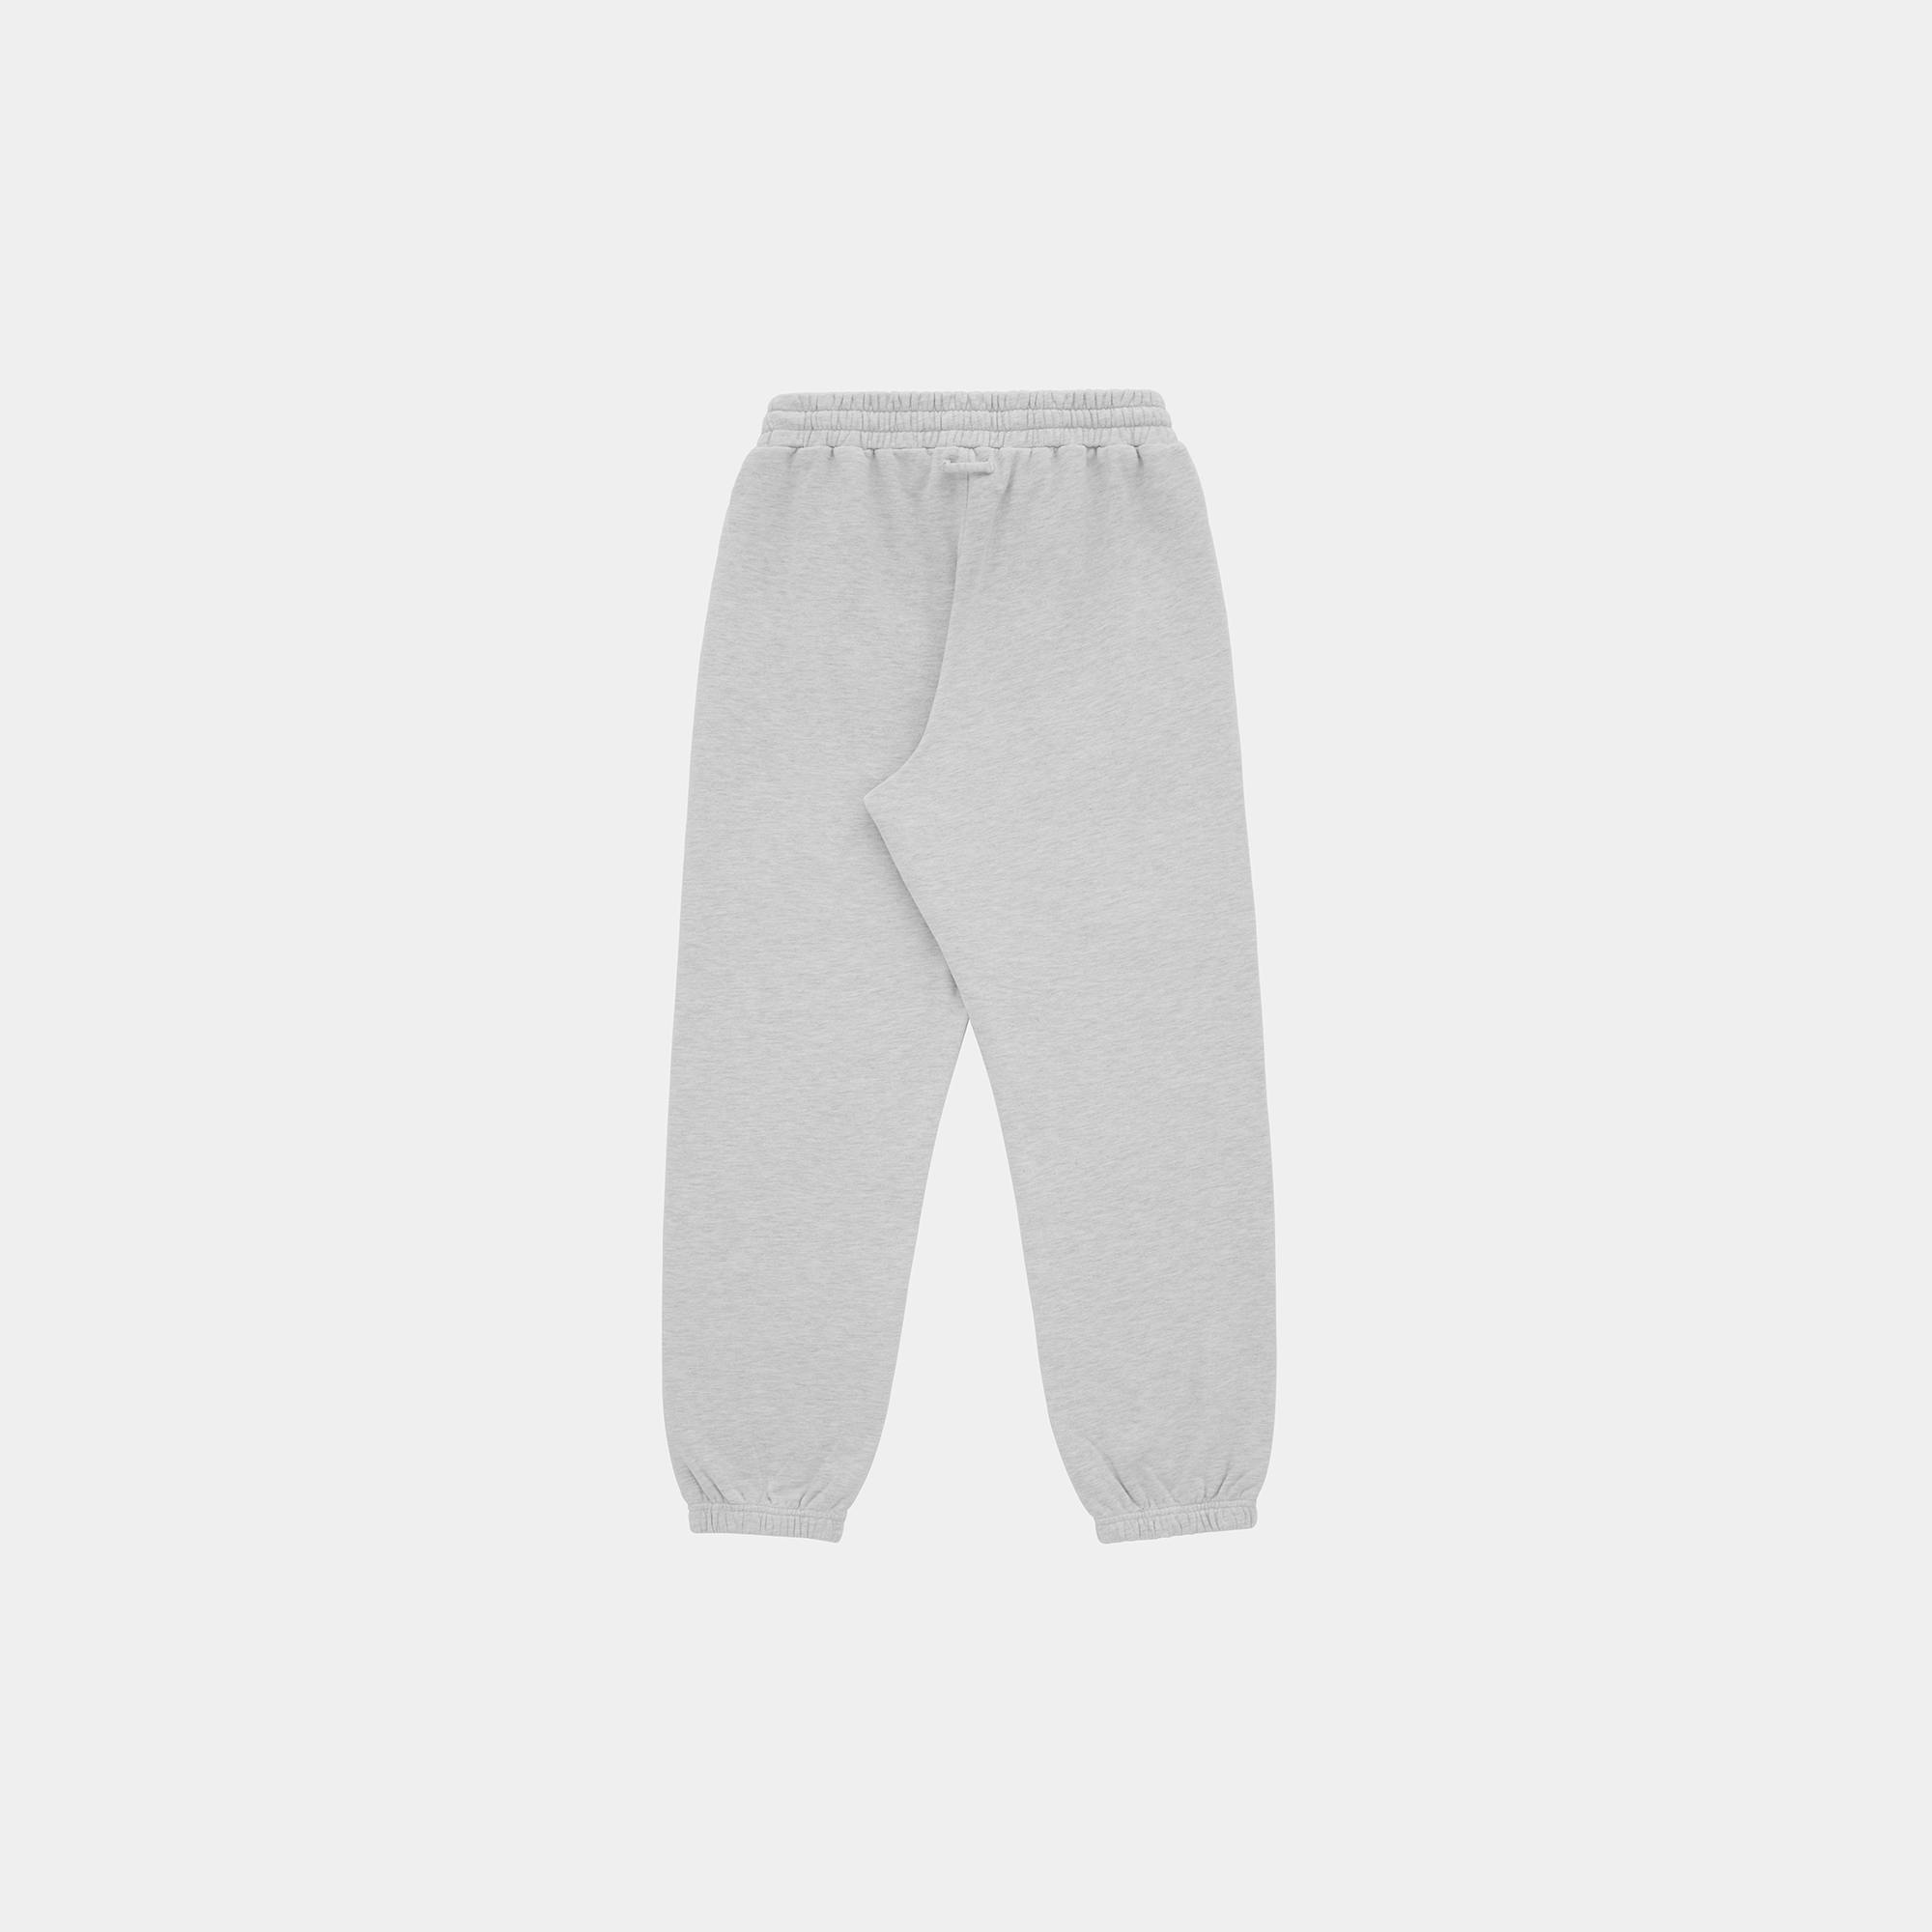 PDP Image: Lounge Sweatpants (W's Fit - Grey) - 3:2 -  Back